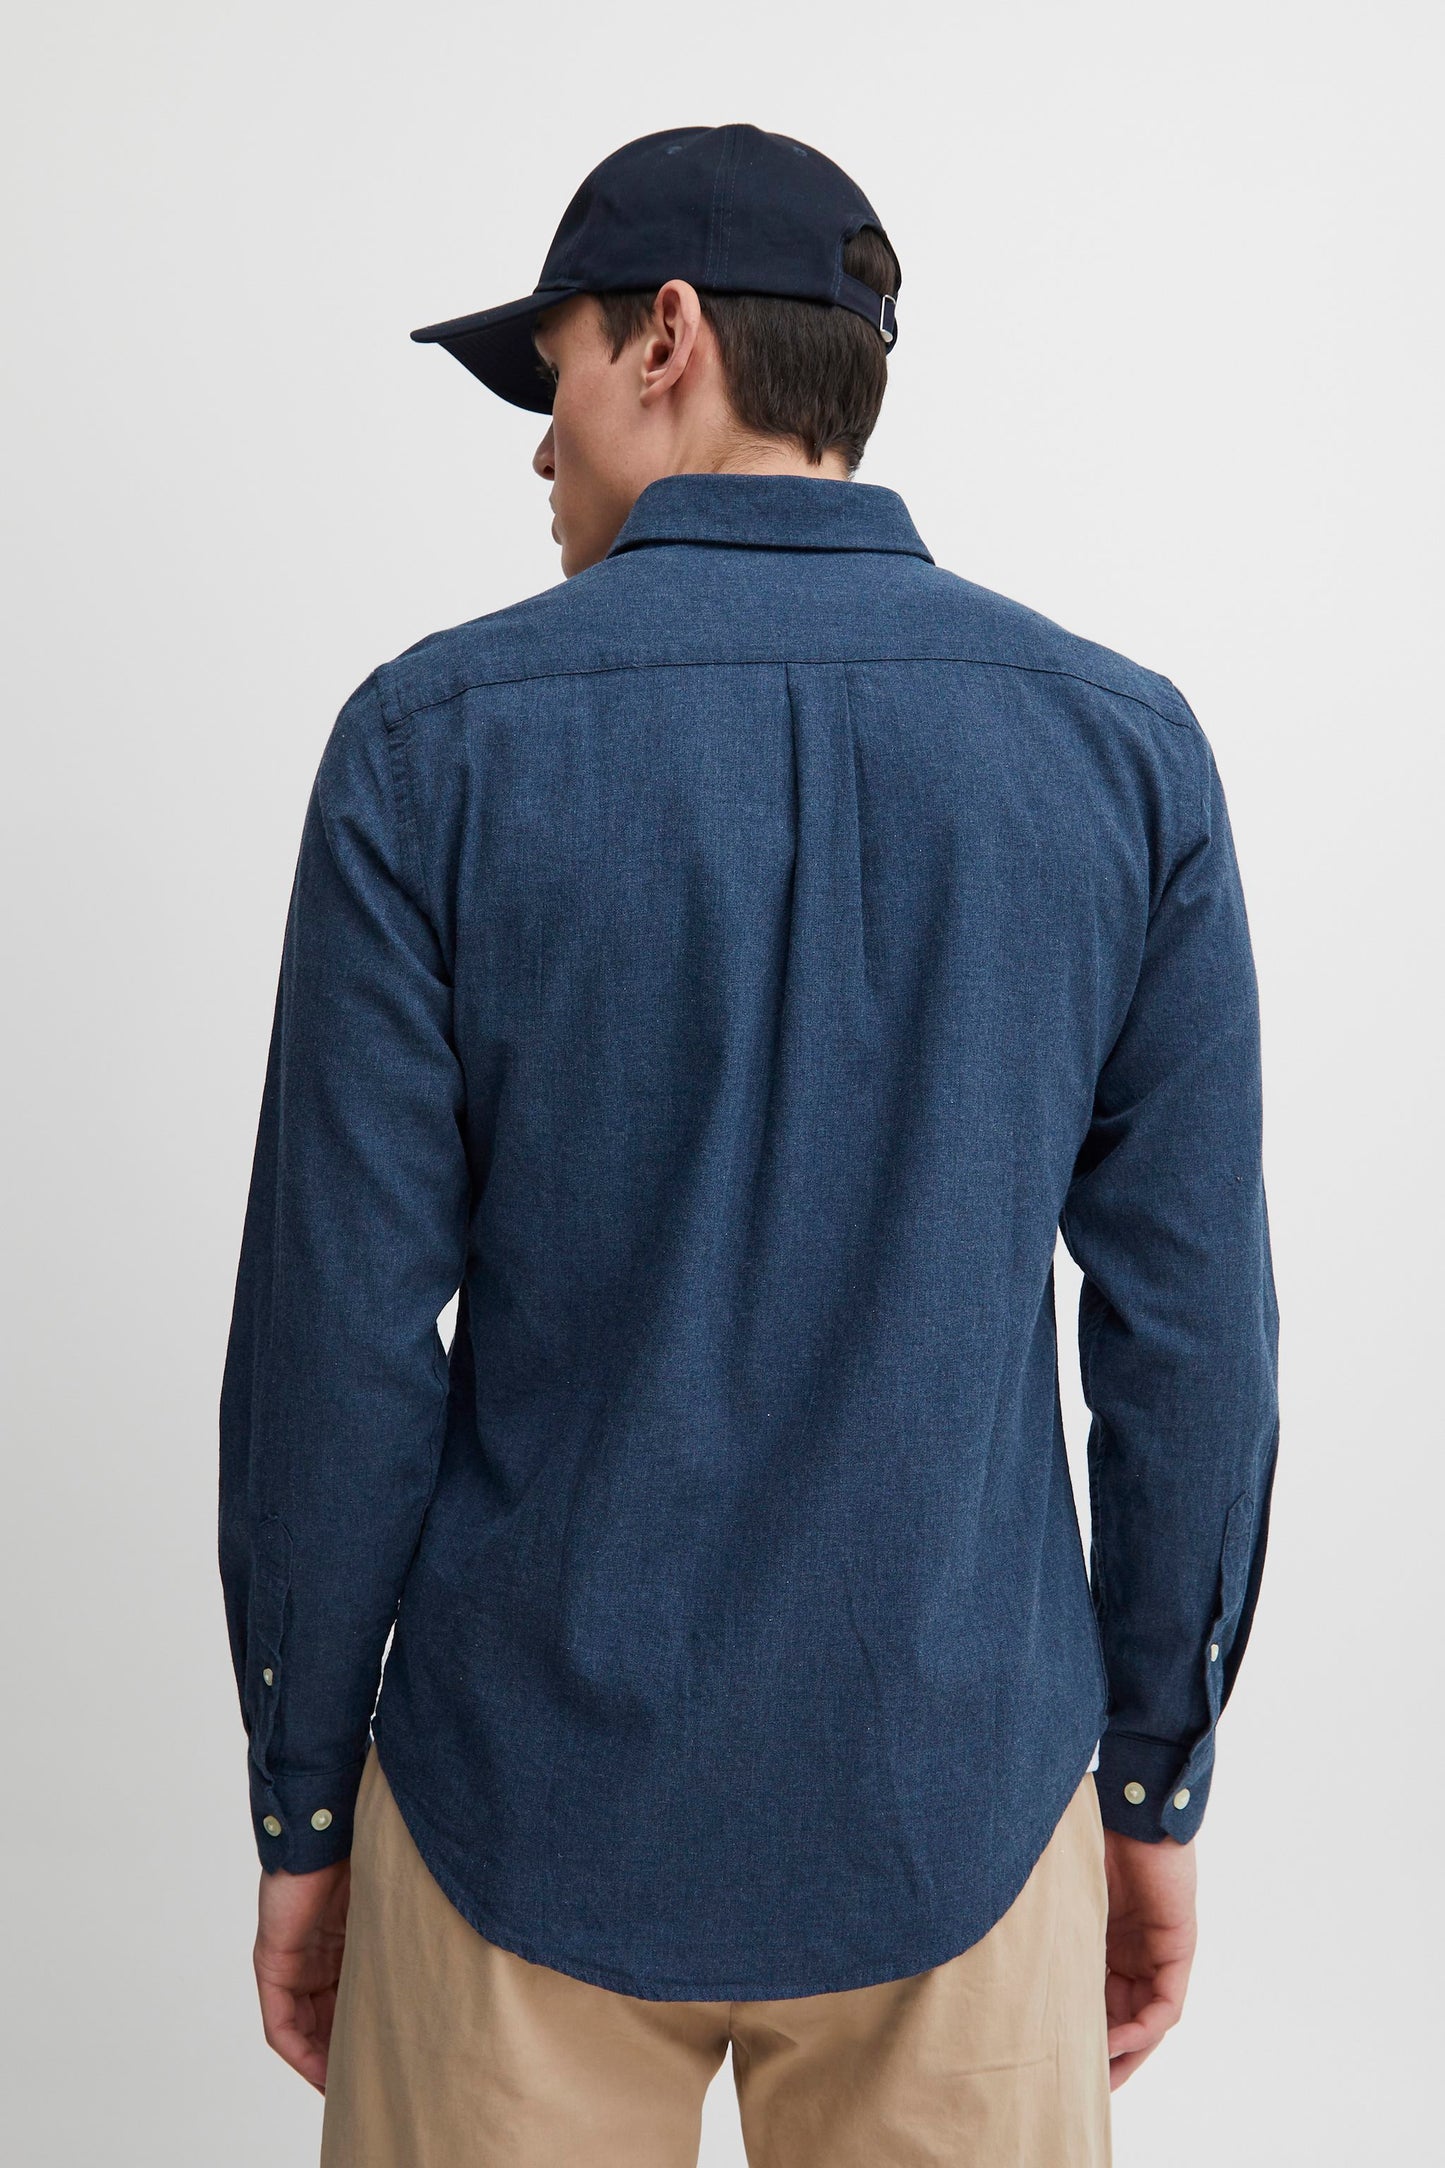 Pure-Cotton Long Sleeve Shirt - Navy Melange